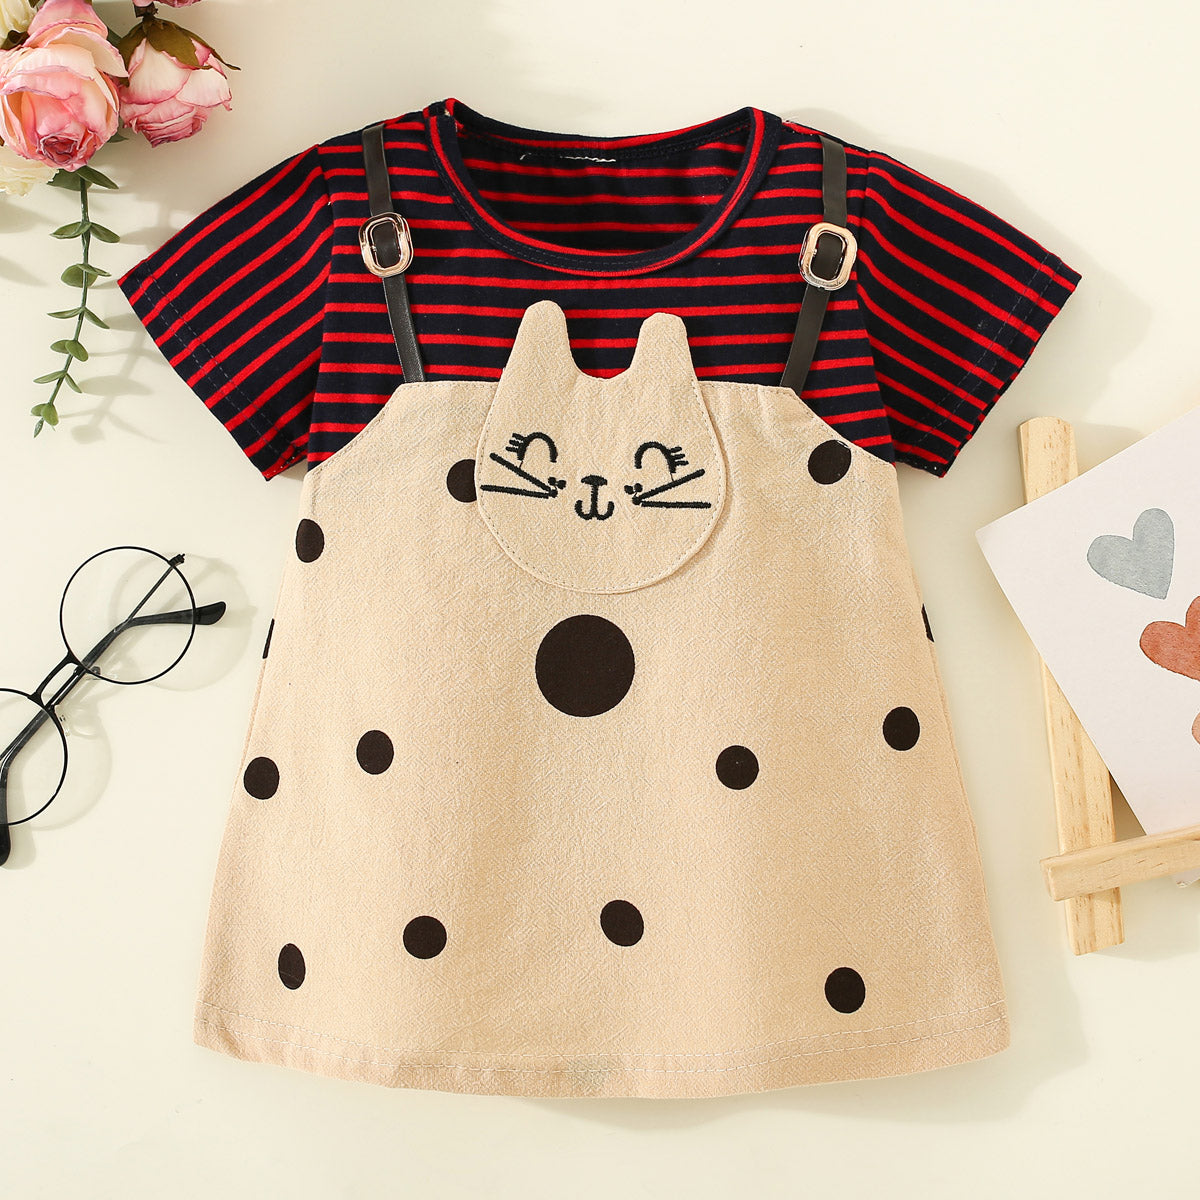 Mayoreo Vestido de manga corta estilo gato de patchwork a rayas con lunares de algodón puro para niña pequeña